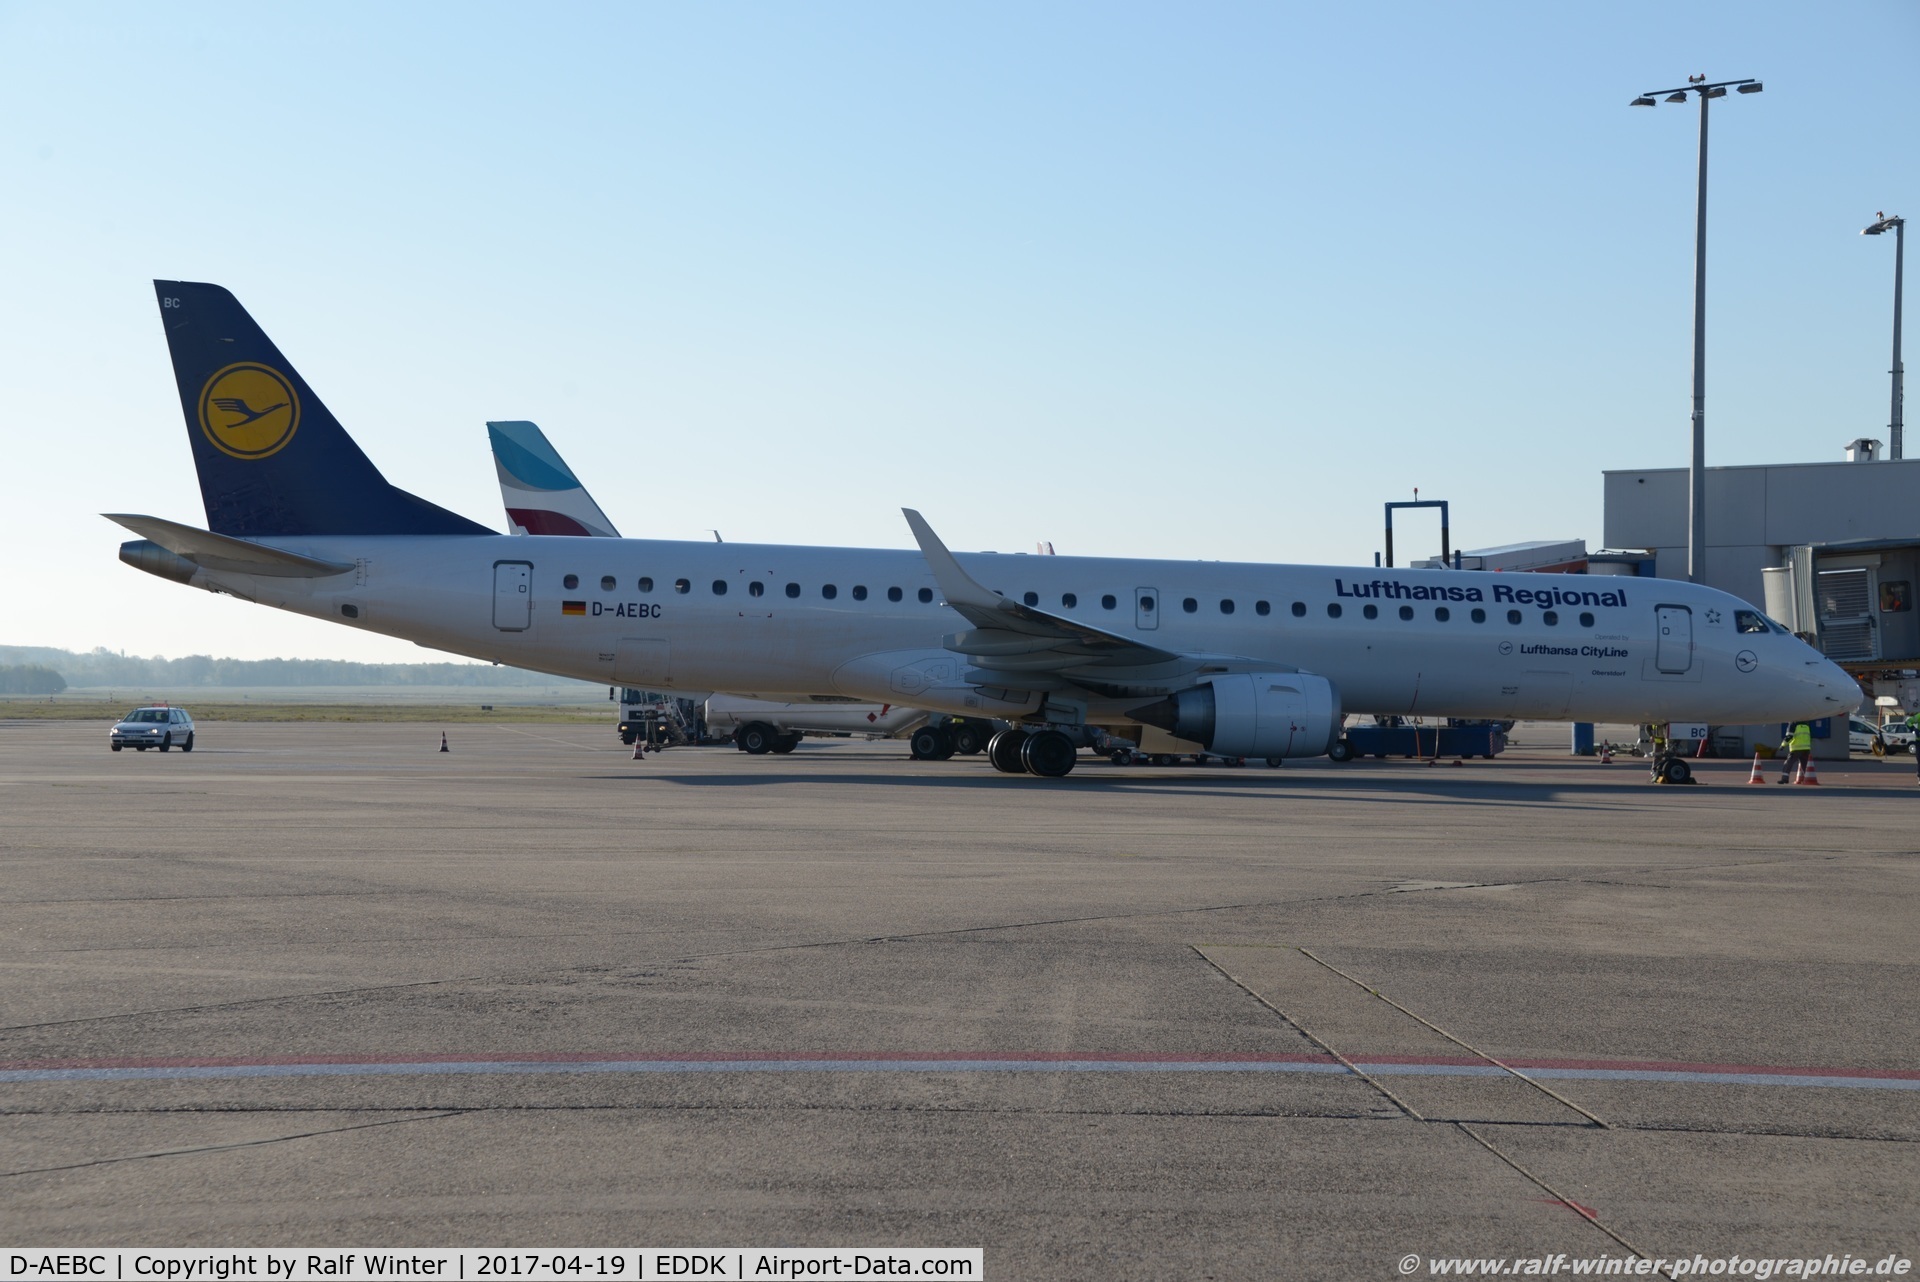 D-AEBC, 2009 Embraer 195LR (ERJ-190-200LR) C/N 19000320, Embraer ERJ-195LR 190-200LR - CL CLH Lufthansa Cityline 'Oberstdorf' - 19000320 - D-AEBC 19.04.2017 - CGN